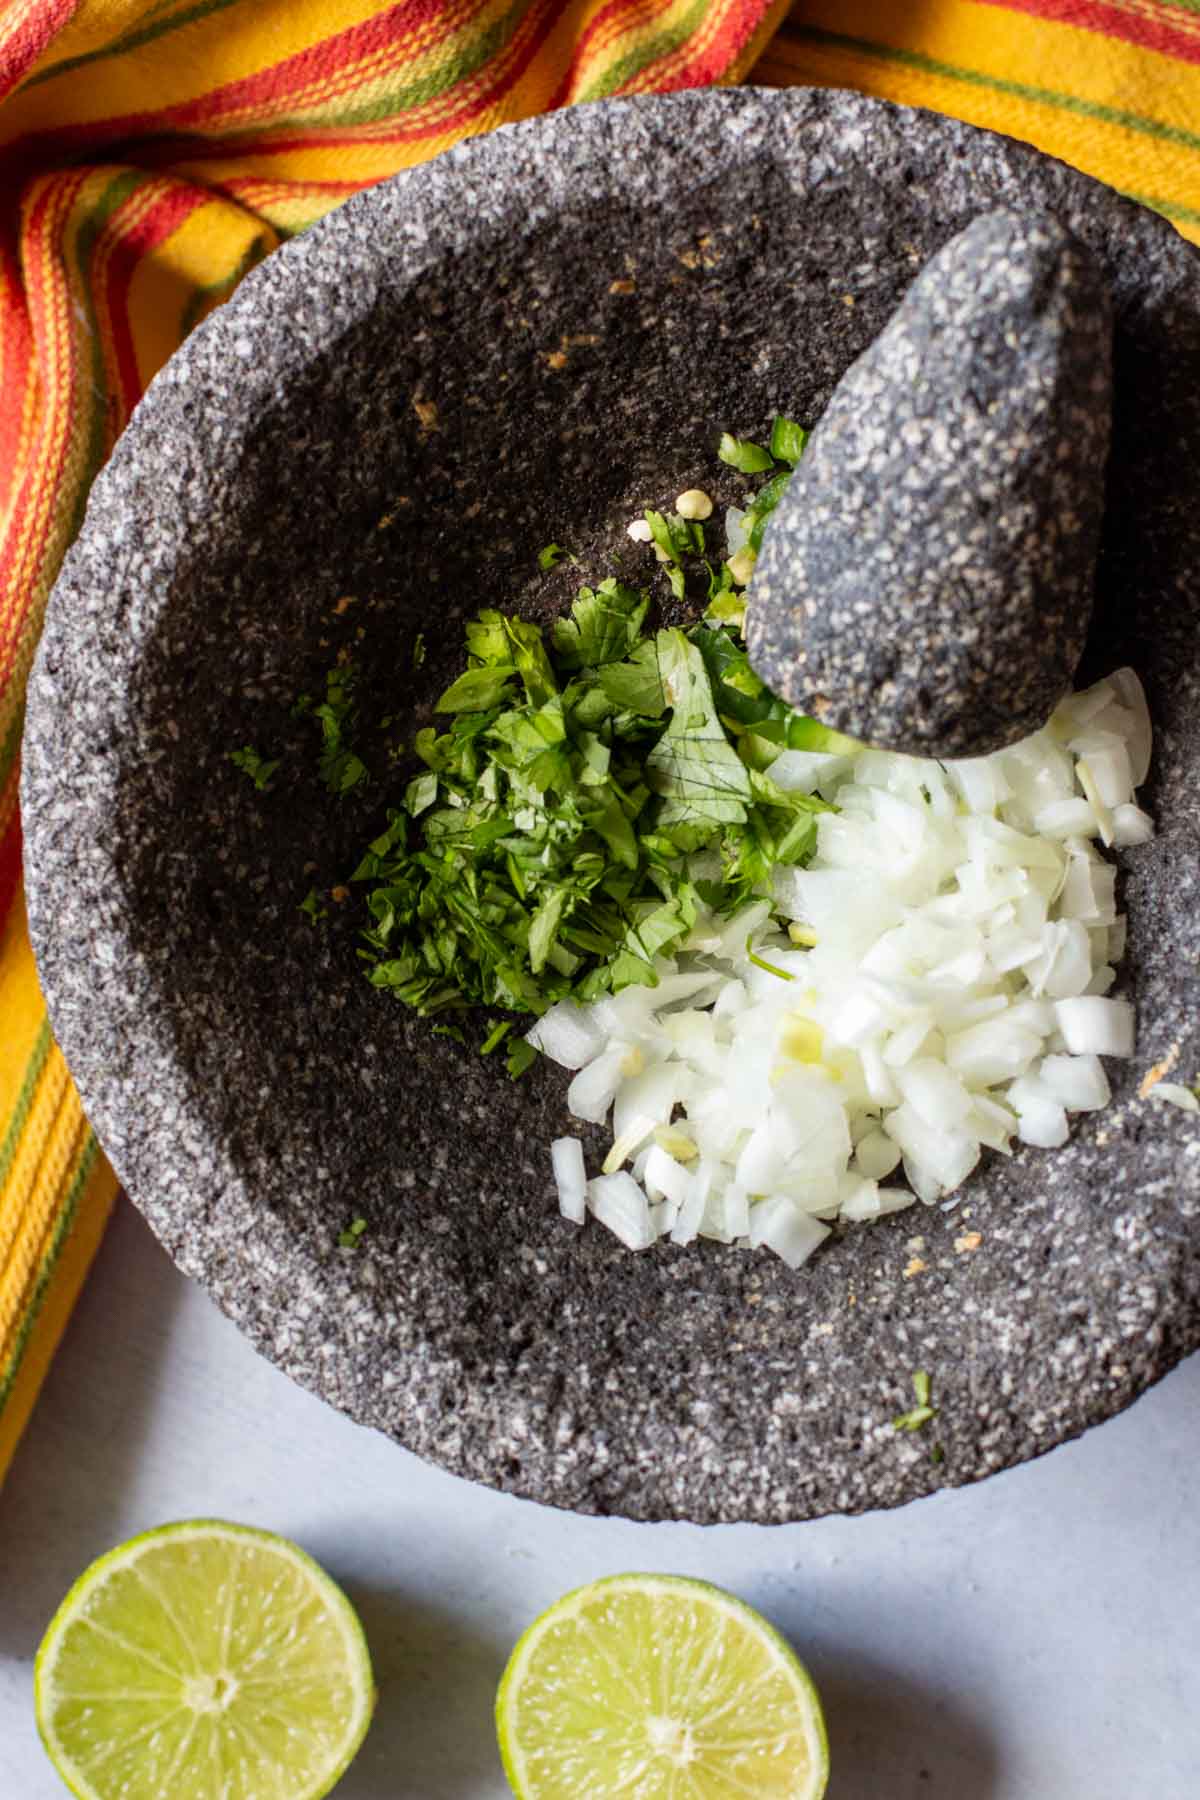 Adding vegetables to a molcajete to make chunky guacamole